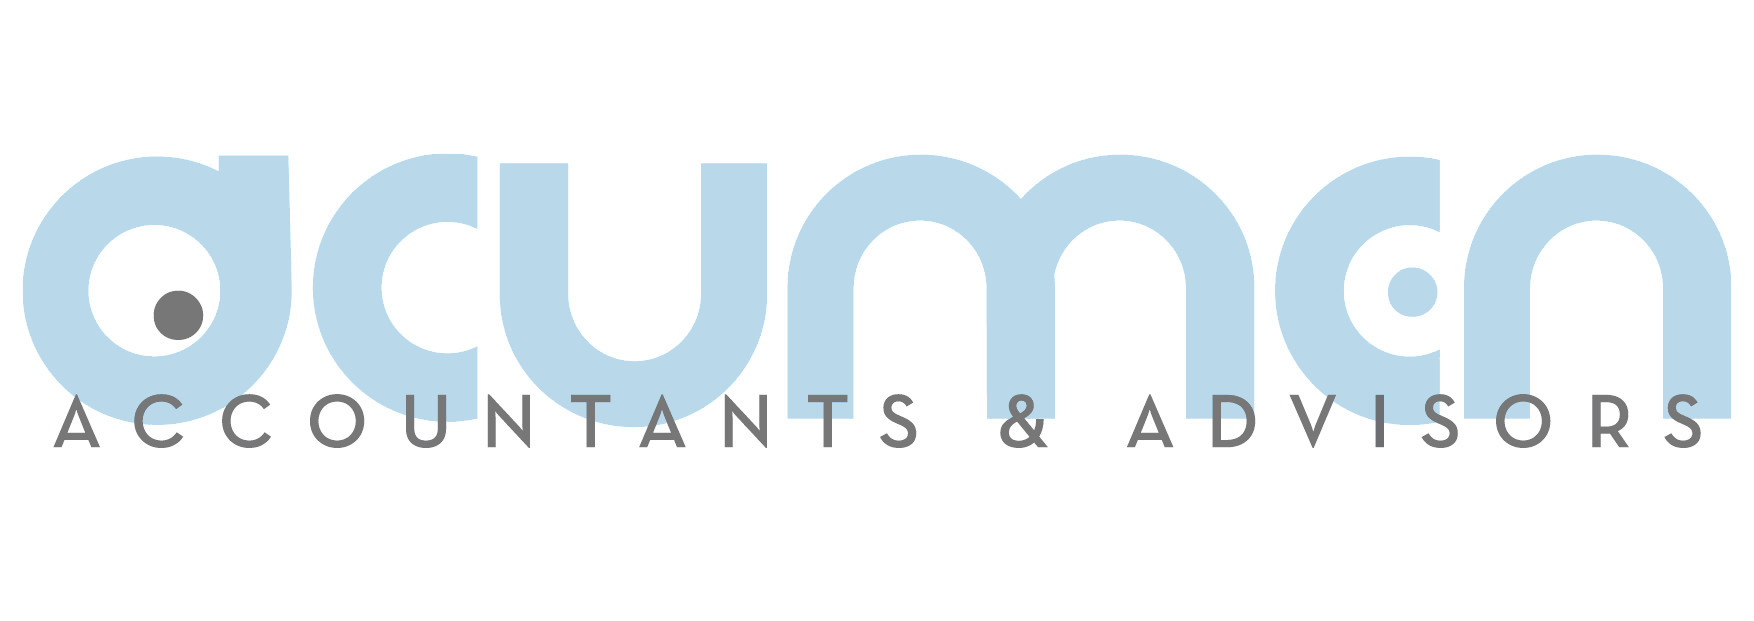 Acumen Accountants & Advisors